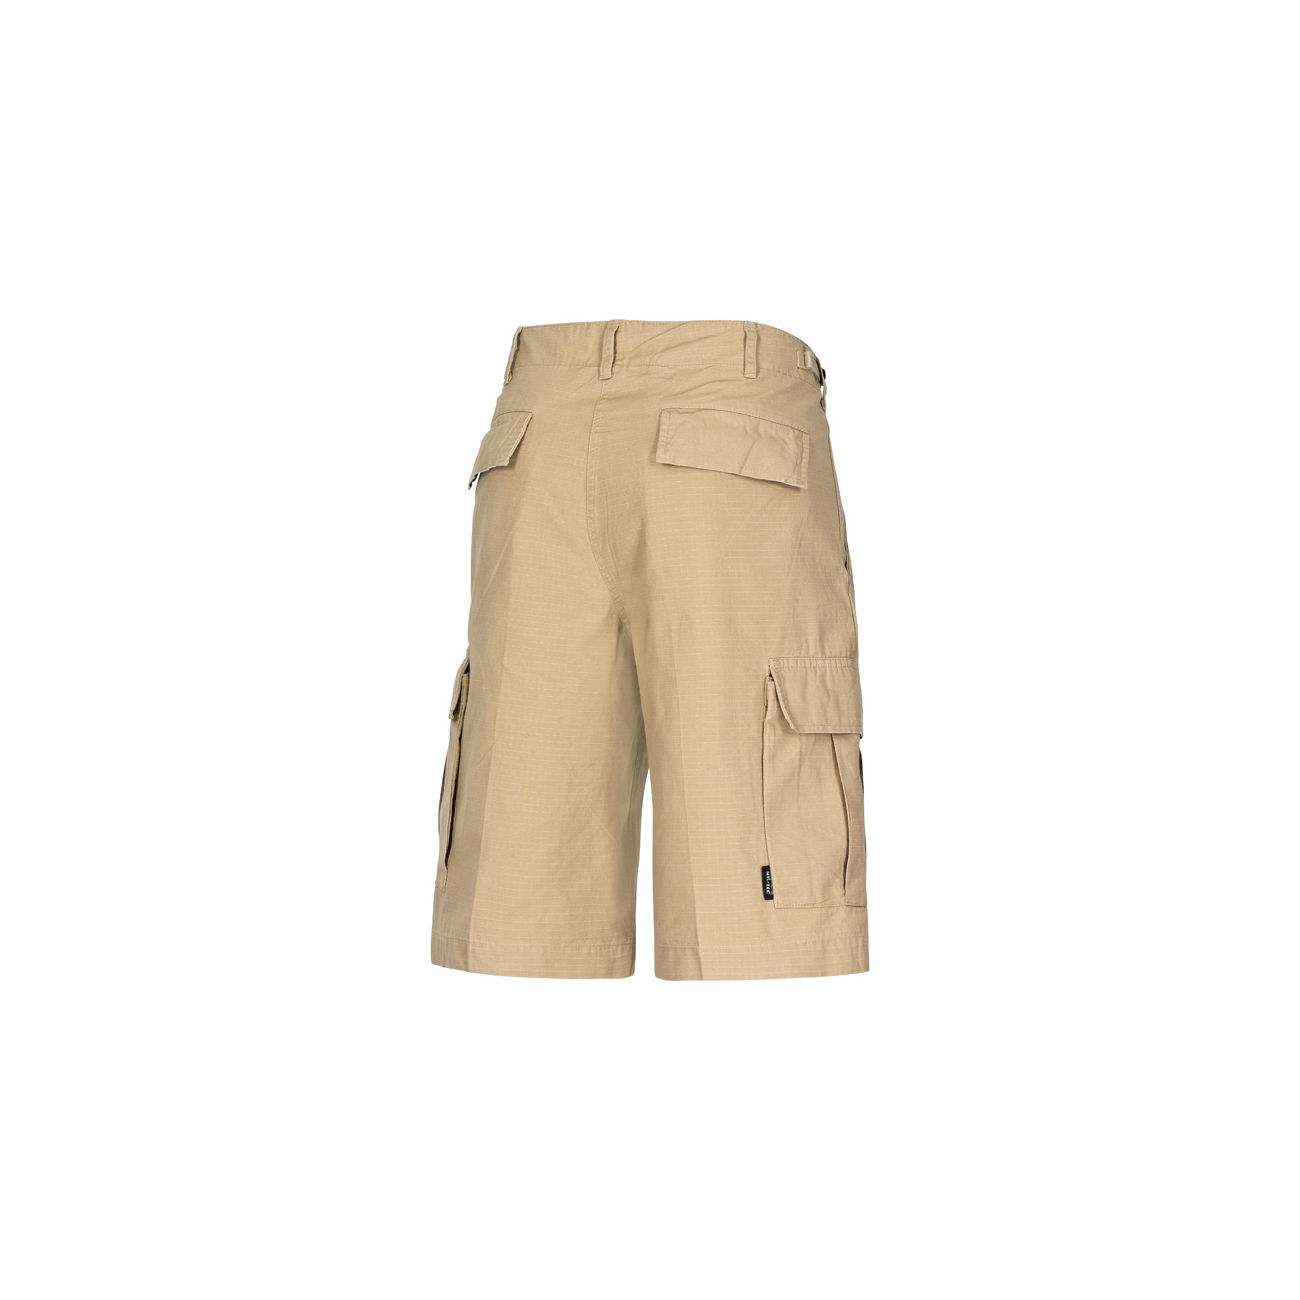 Bermuda Shorts Ripstop, khaki, Prewash, Bild 1